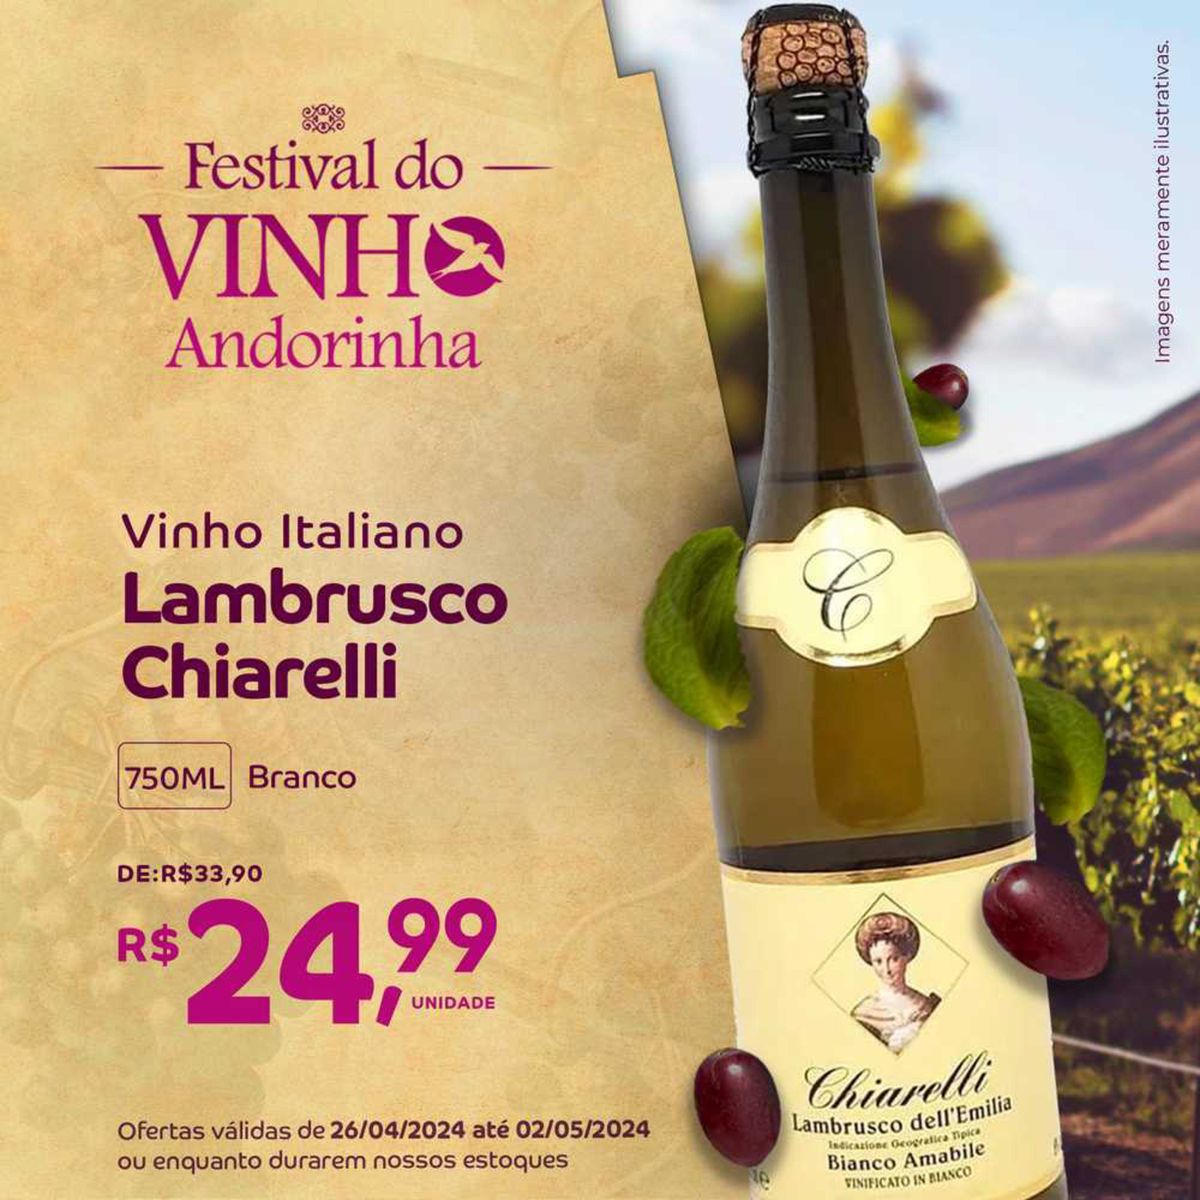 Festival do Vinho Italiano Andorinha - Lambrusco Chiarelli 750ML Branco